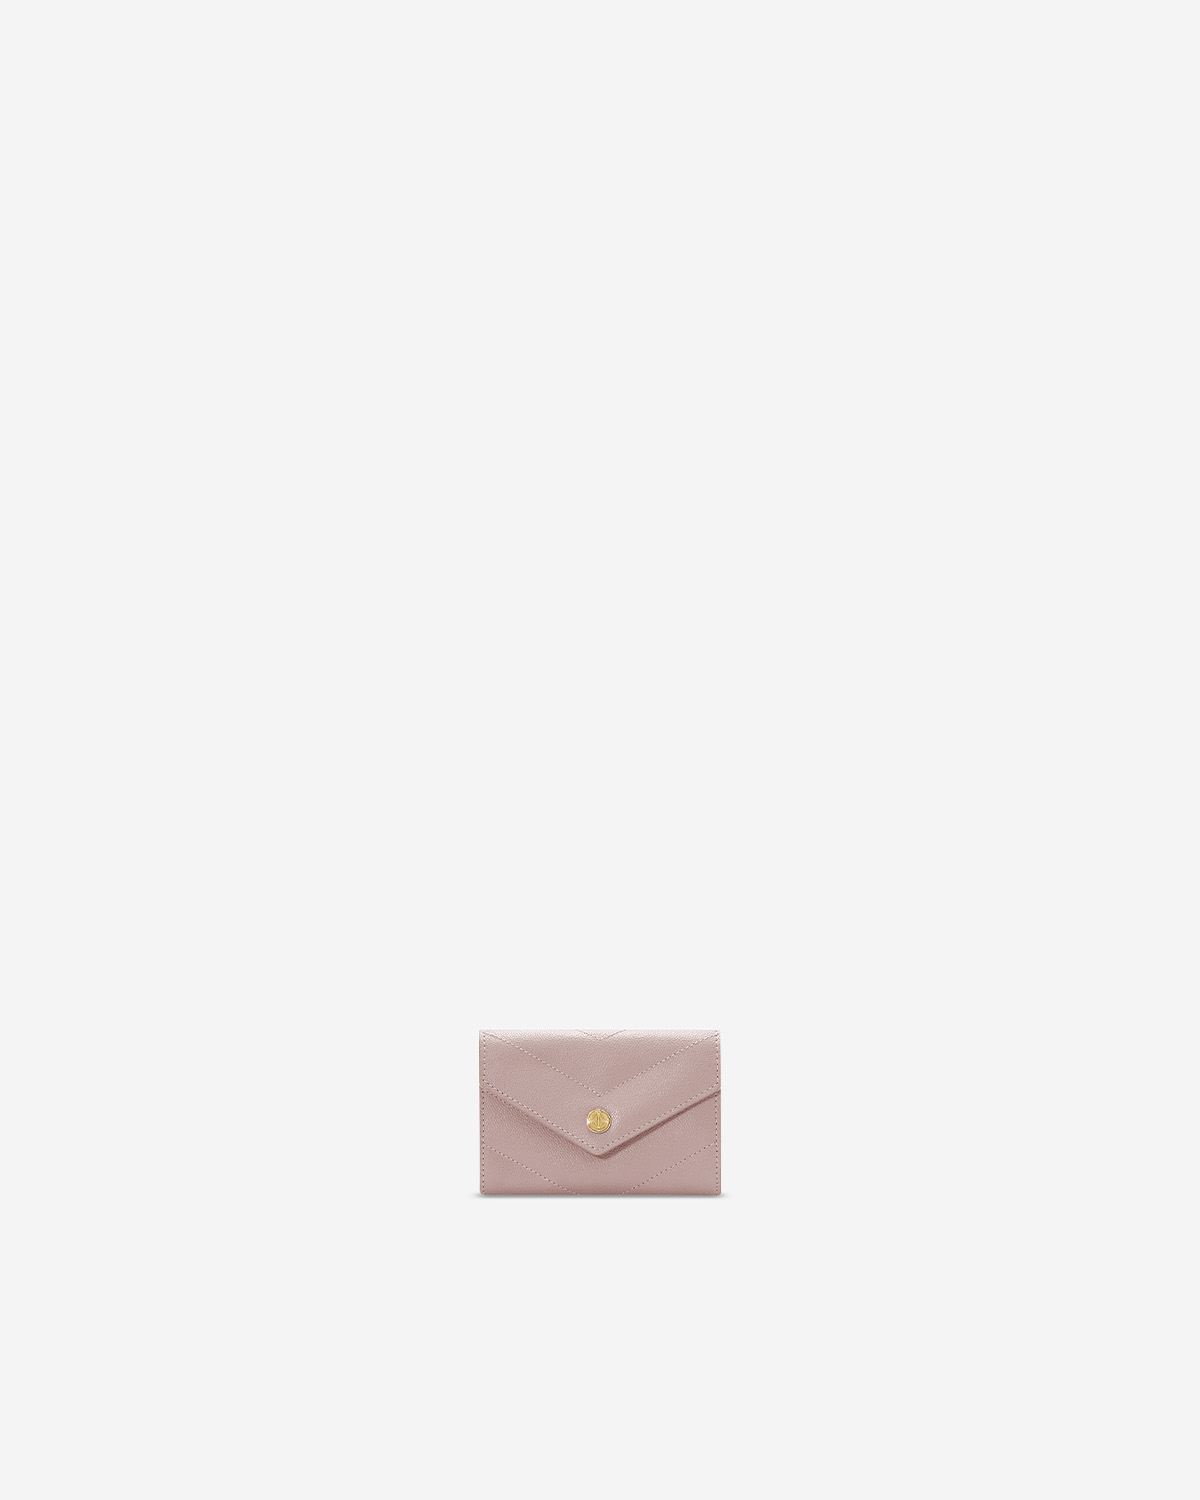 VERA CAVIAR Envelop Wallet in Rose Quartz กระเป๋าสตางค์ทรง envelop ทำจากหนังแท้ลาย Caviar สี Rose Quartz